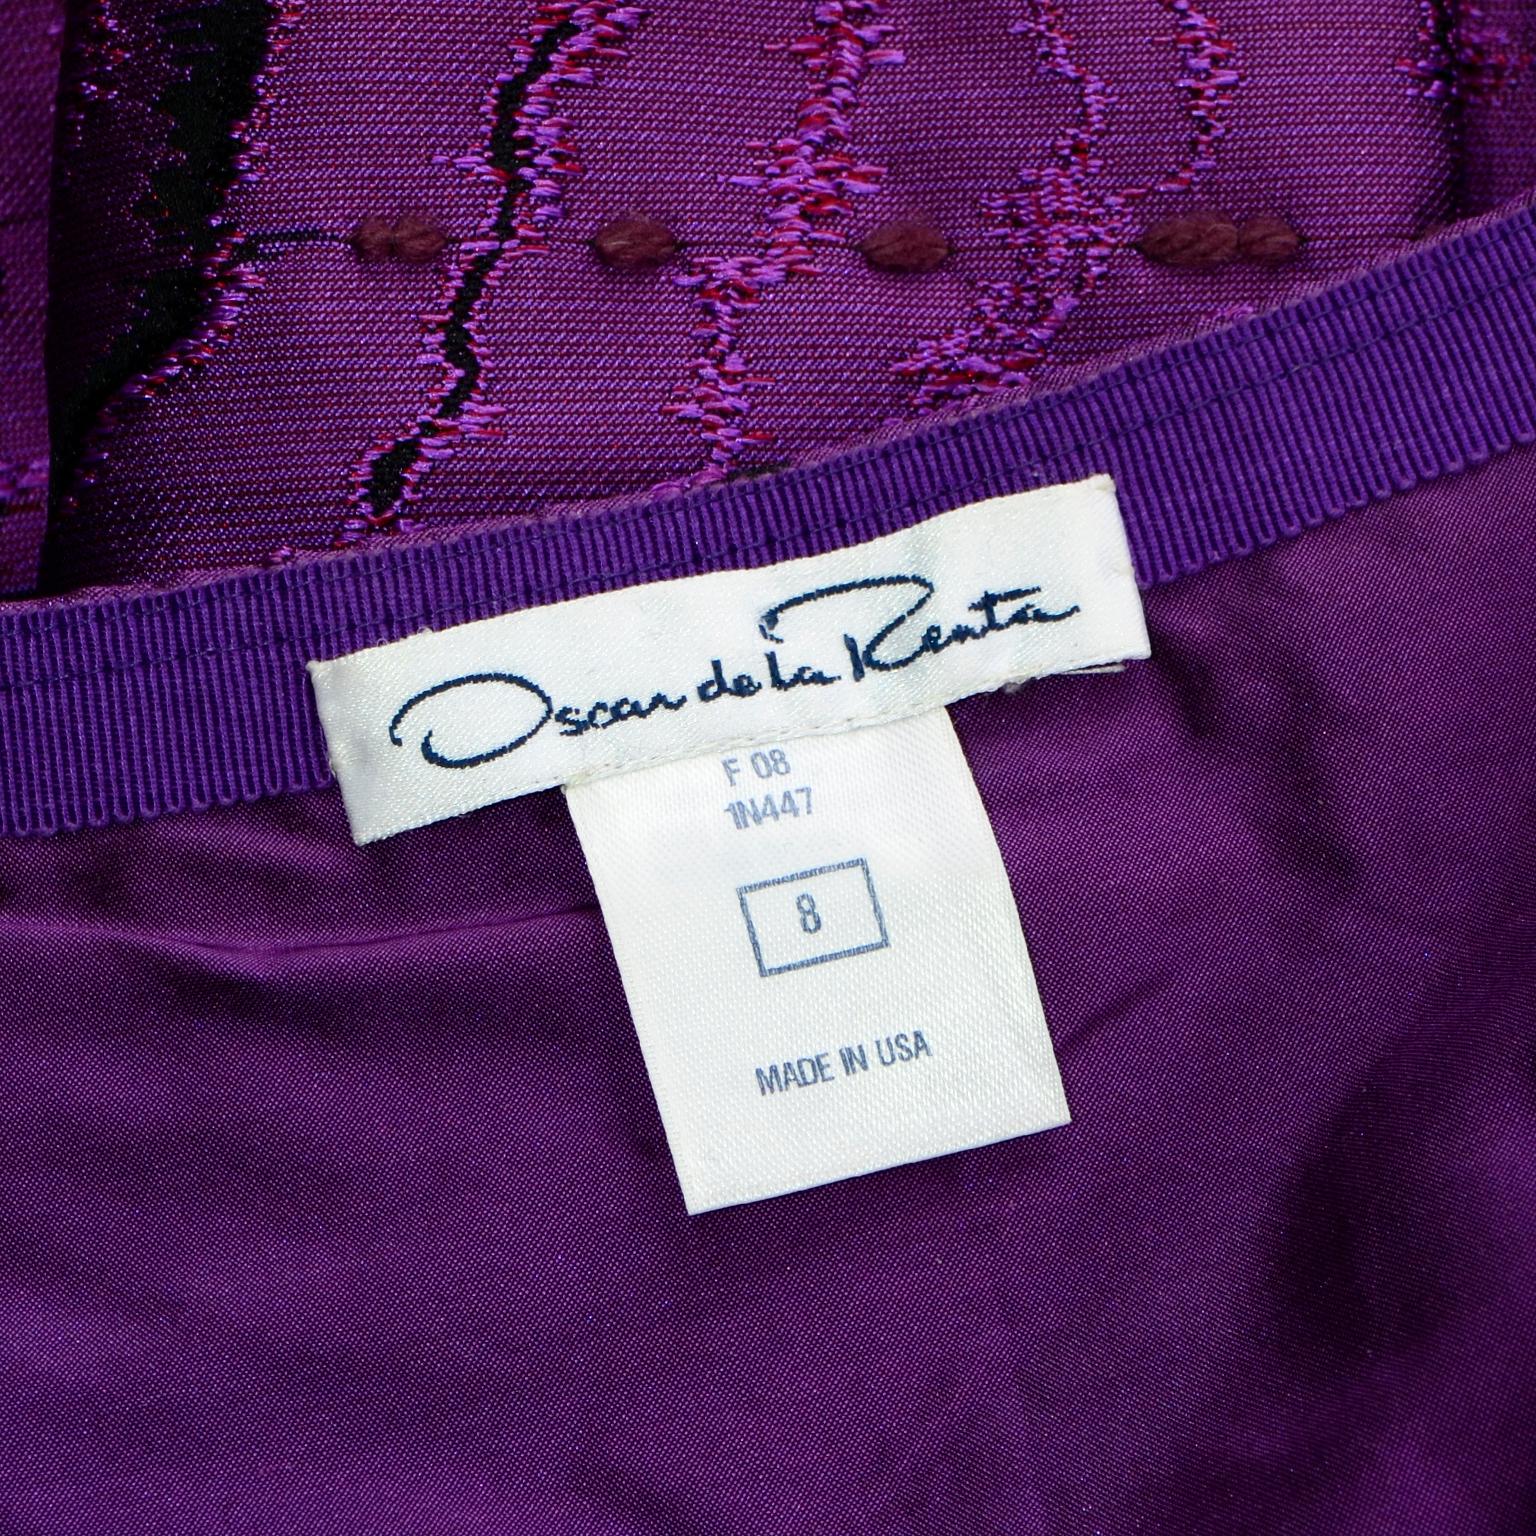 Oscar de la Renta Fall 2008 Purple Textured Skirt Runway Documented For Sale 5